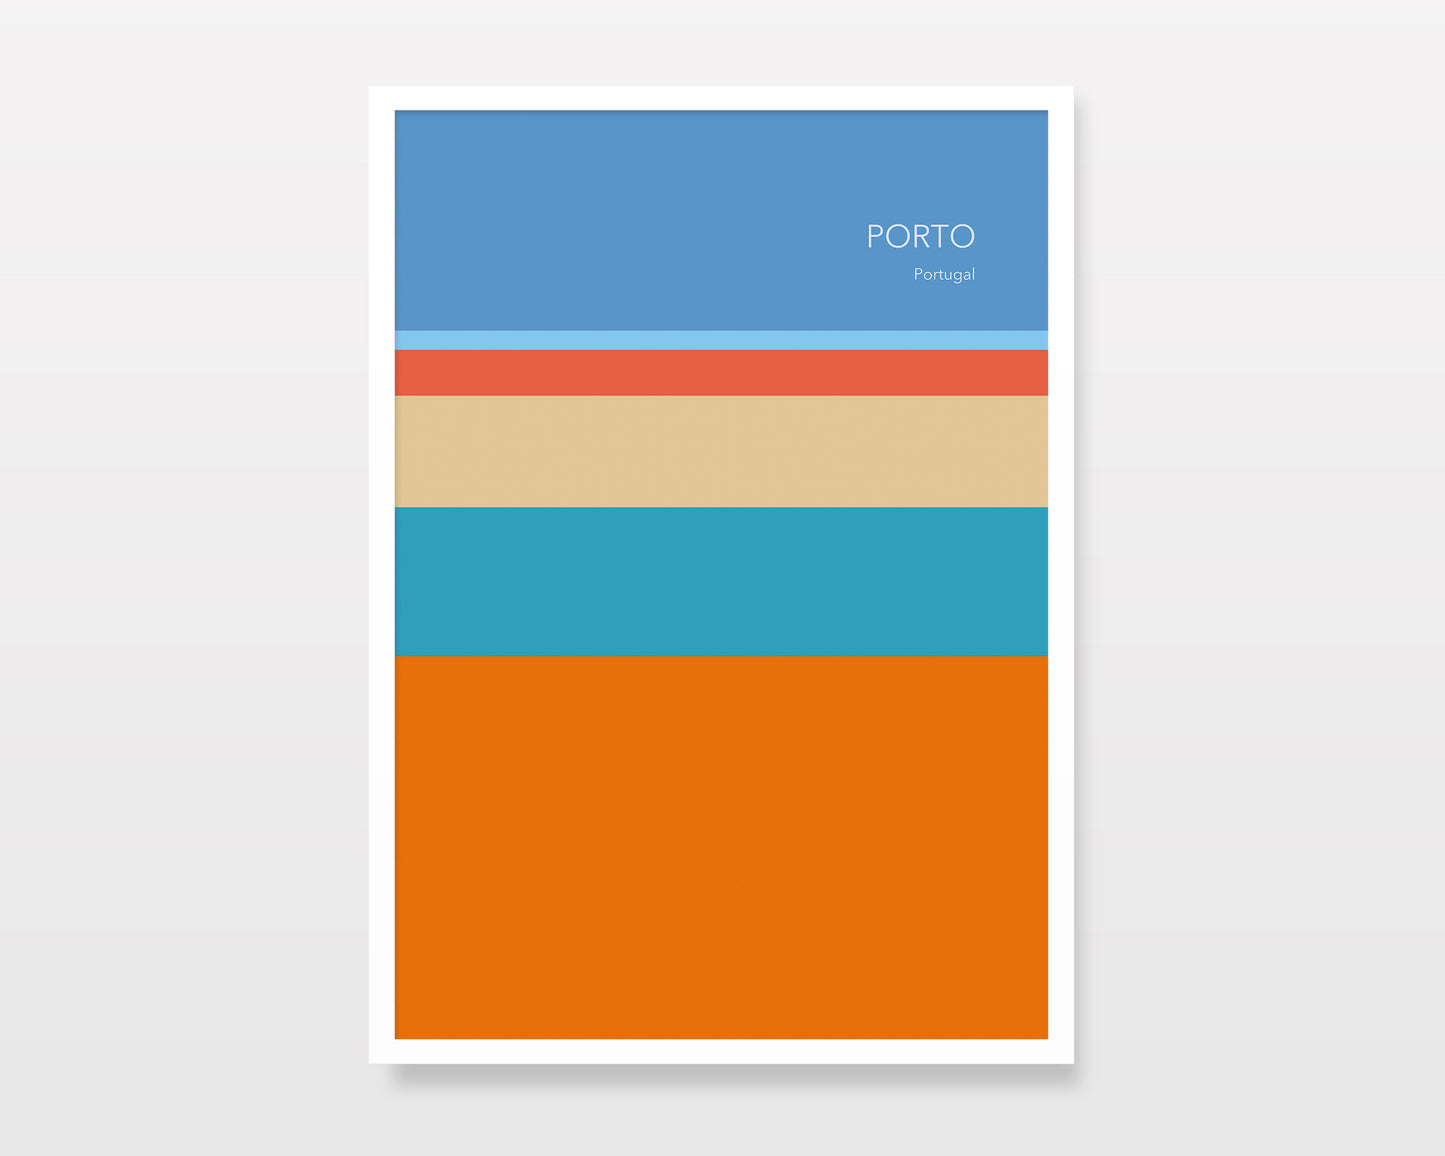 PORTO - Minimalist Travel Print Poster